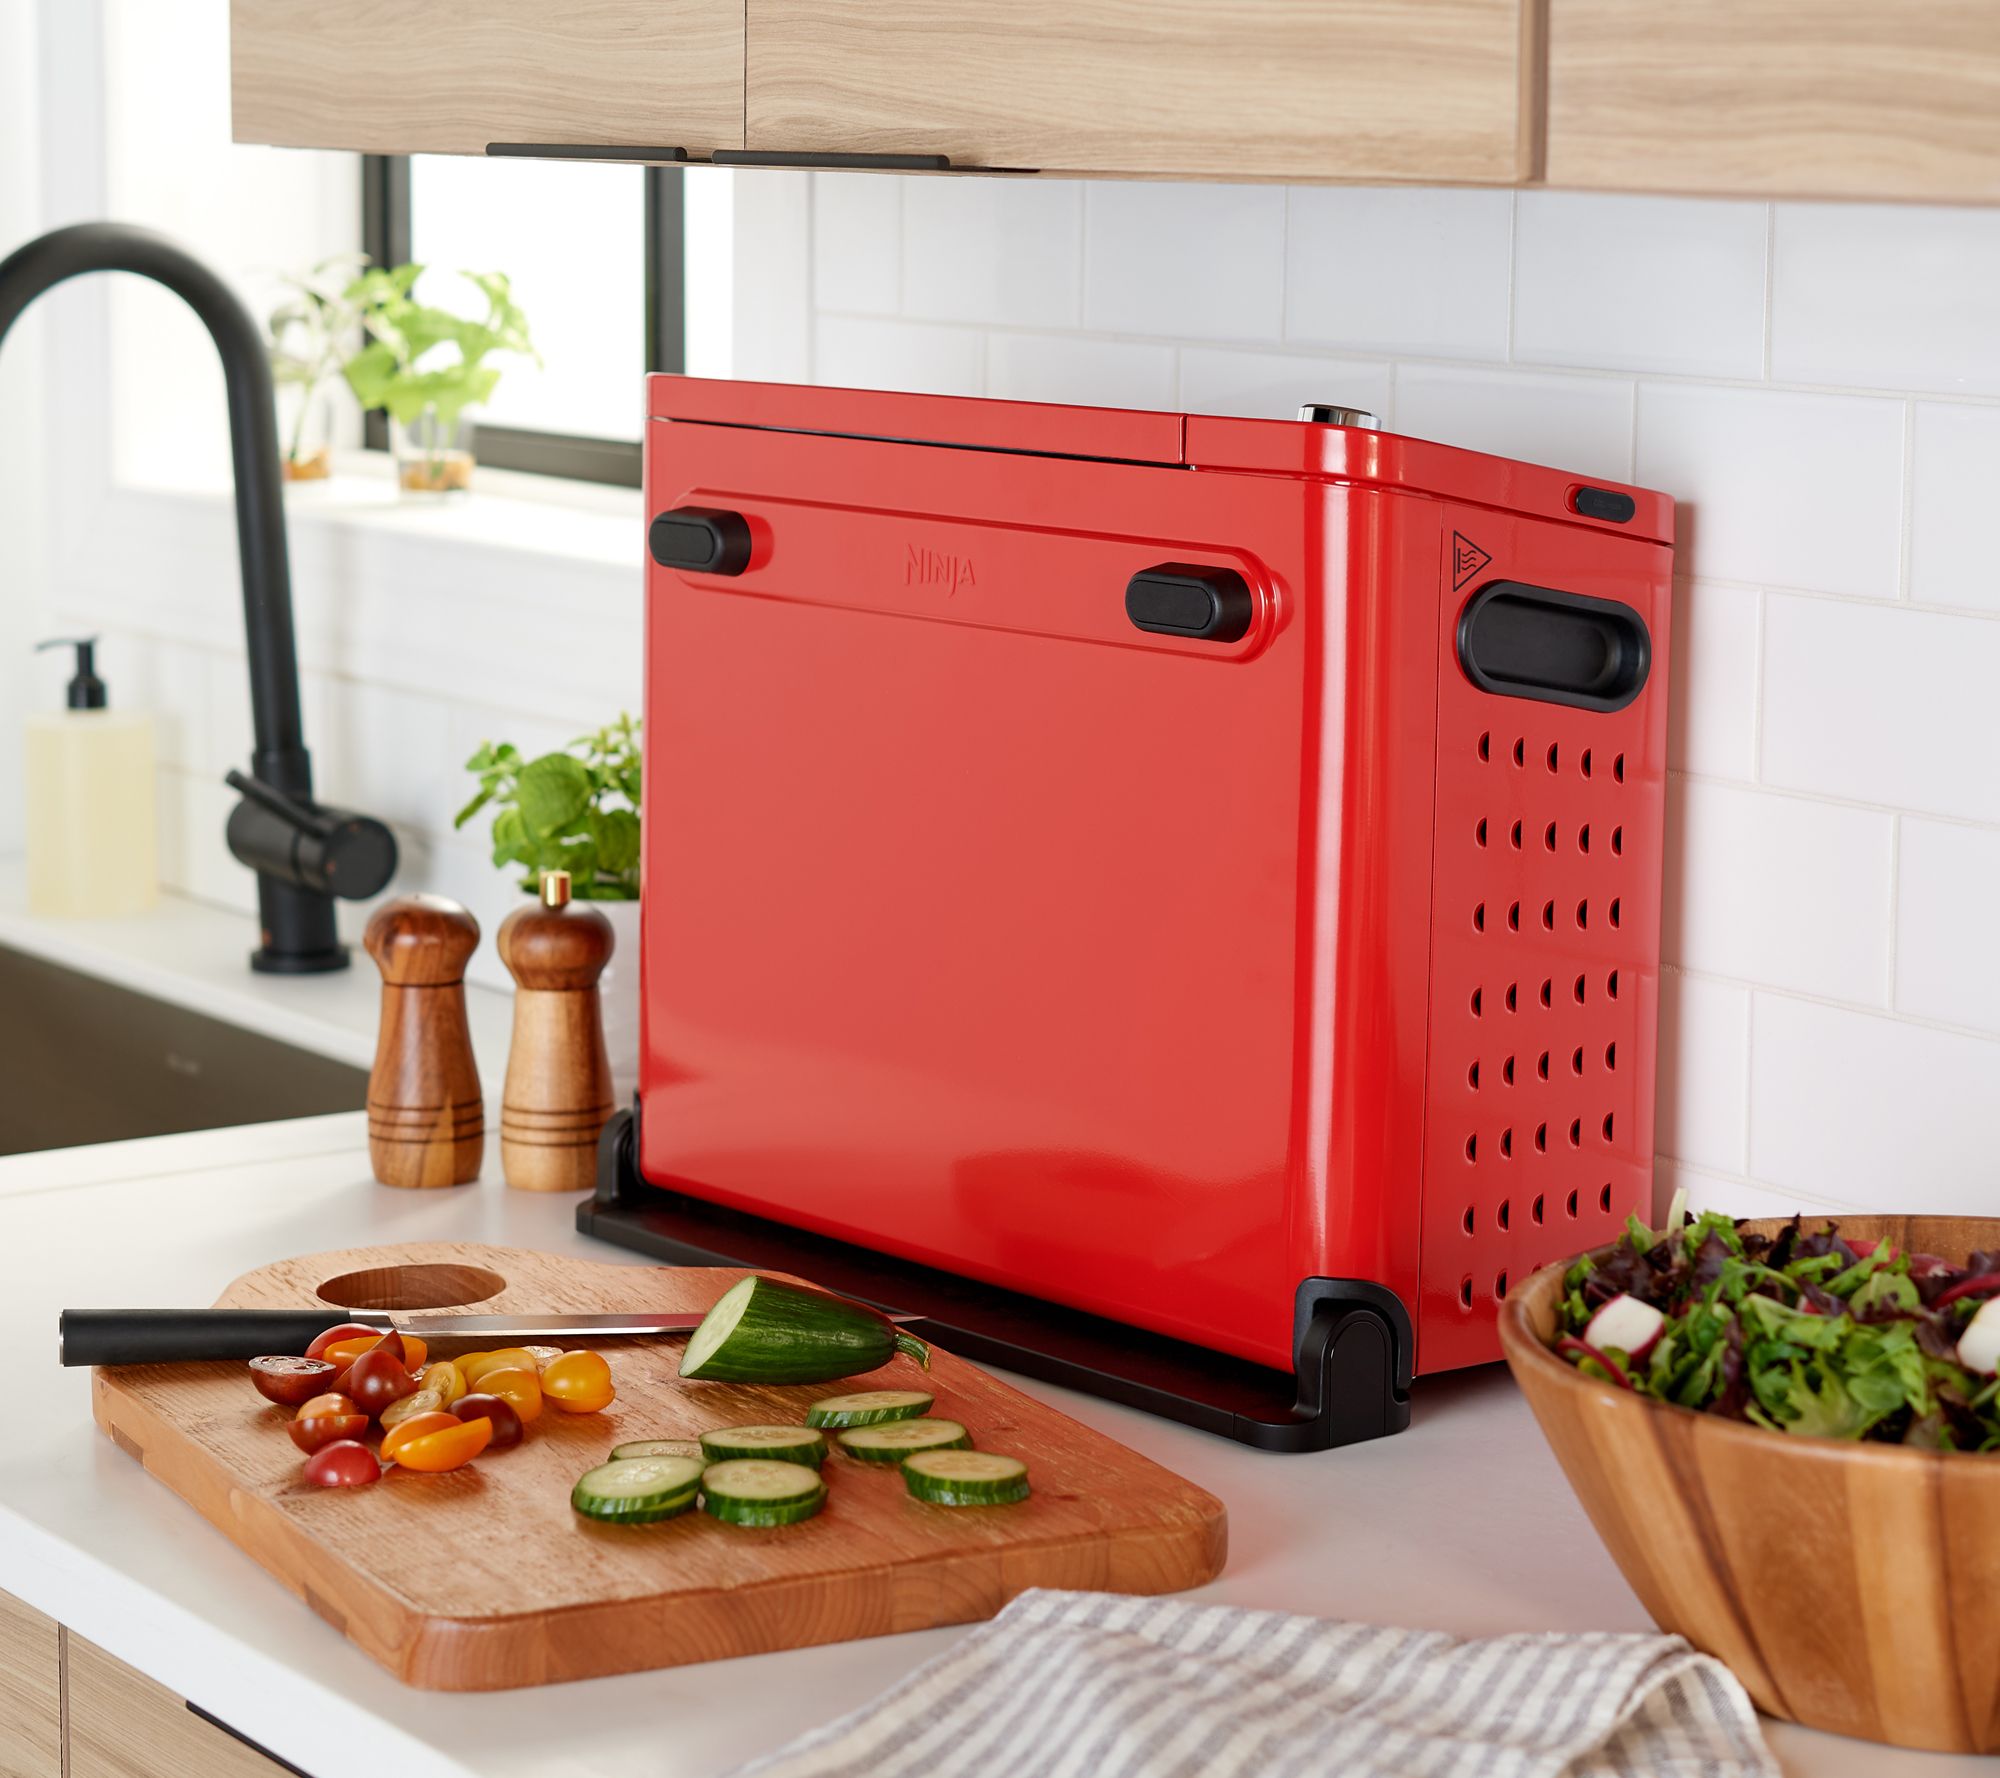 As Is Ninja Foodi 15-in-1 Smart Dual Heat Air Fry Flip Oven w/Probe 